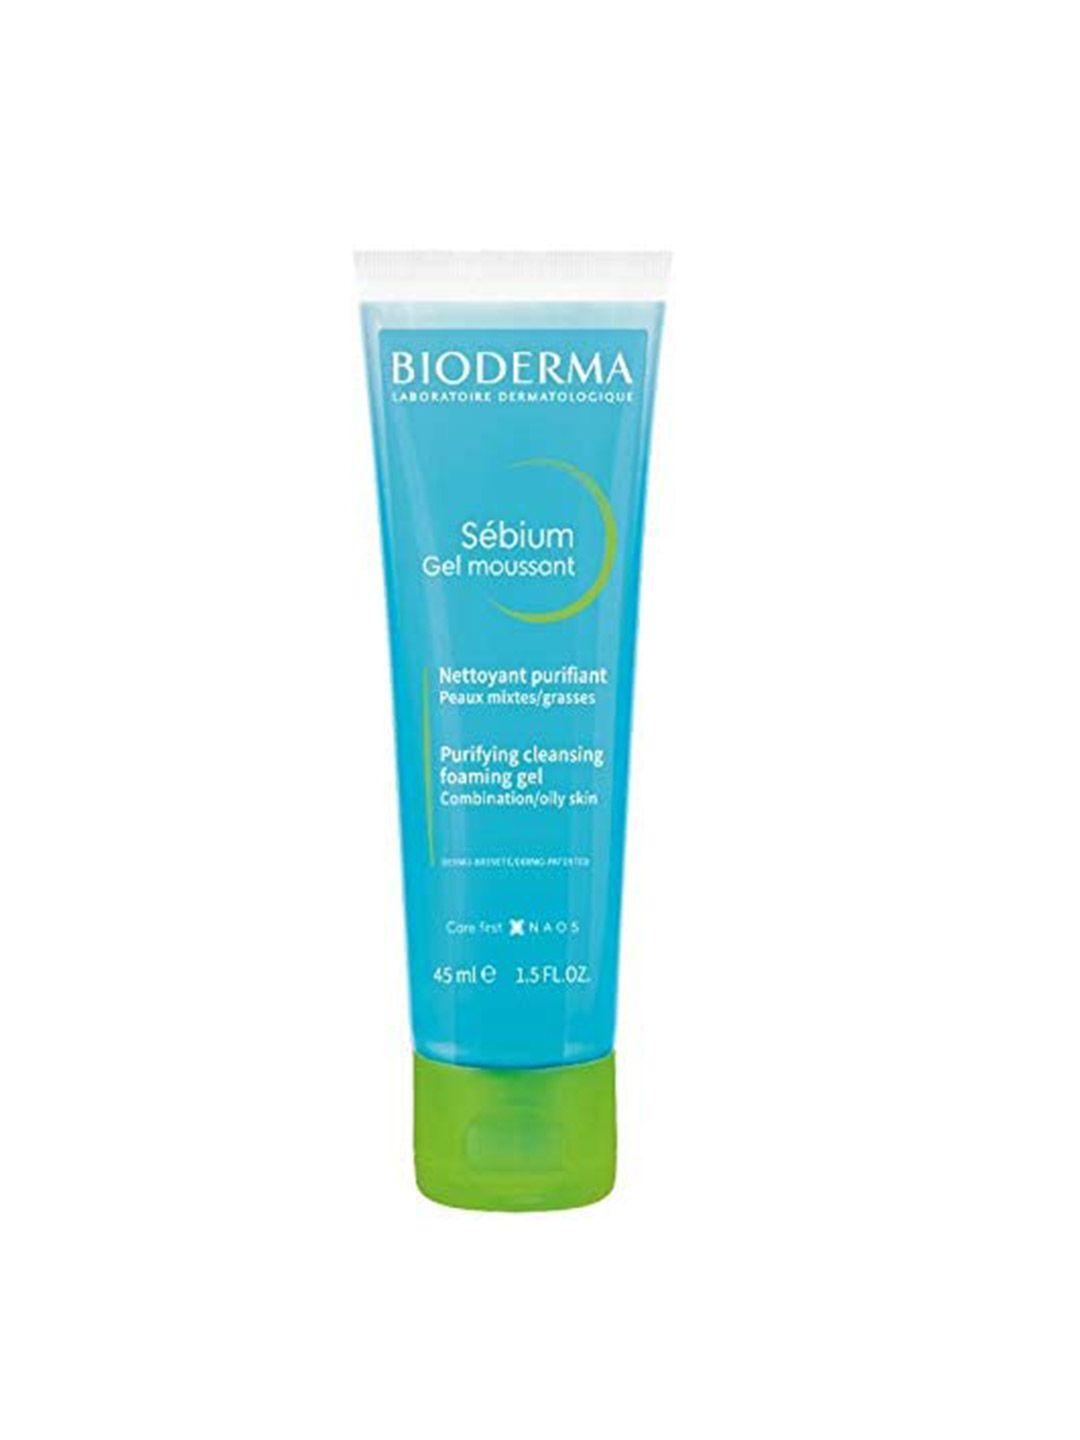 bioderma sebium gel moussant purifying cleansing foaming gel - 45 ml